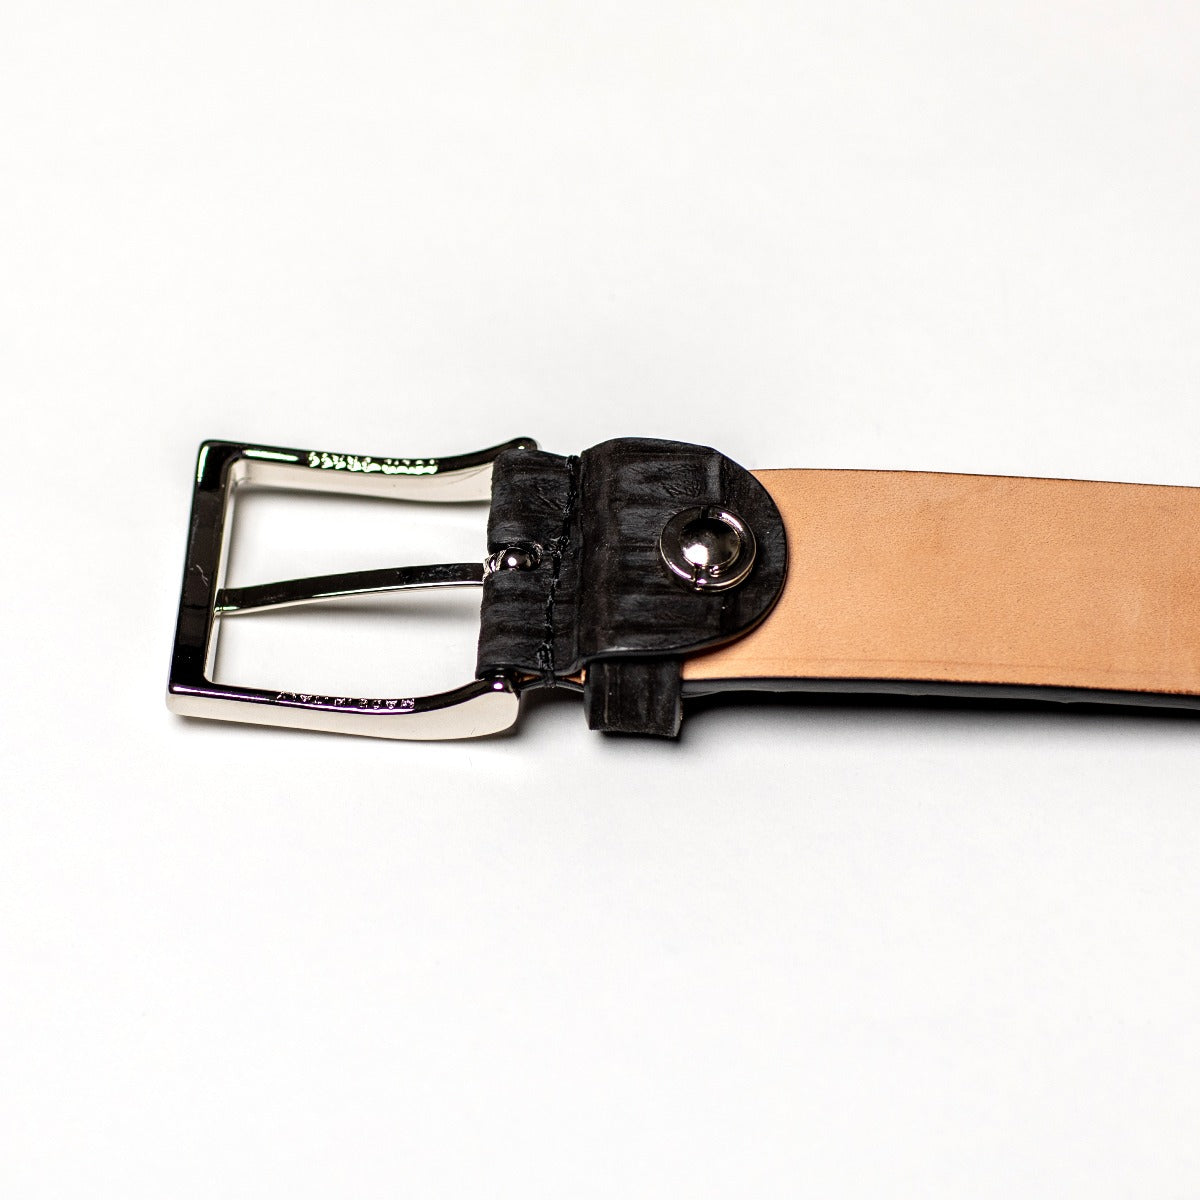 A Simonnot Godard Black Nubuck Crocodile Belt with a silver buckle featuring a nubuck texture by KirbyAllison.com.